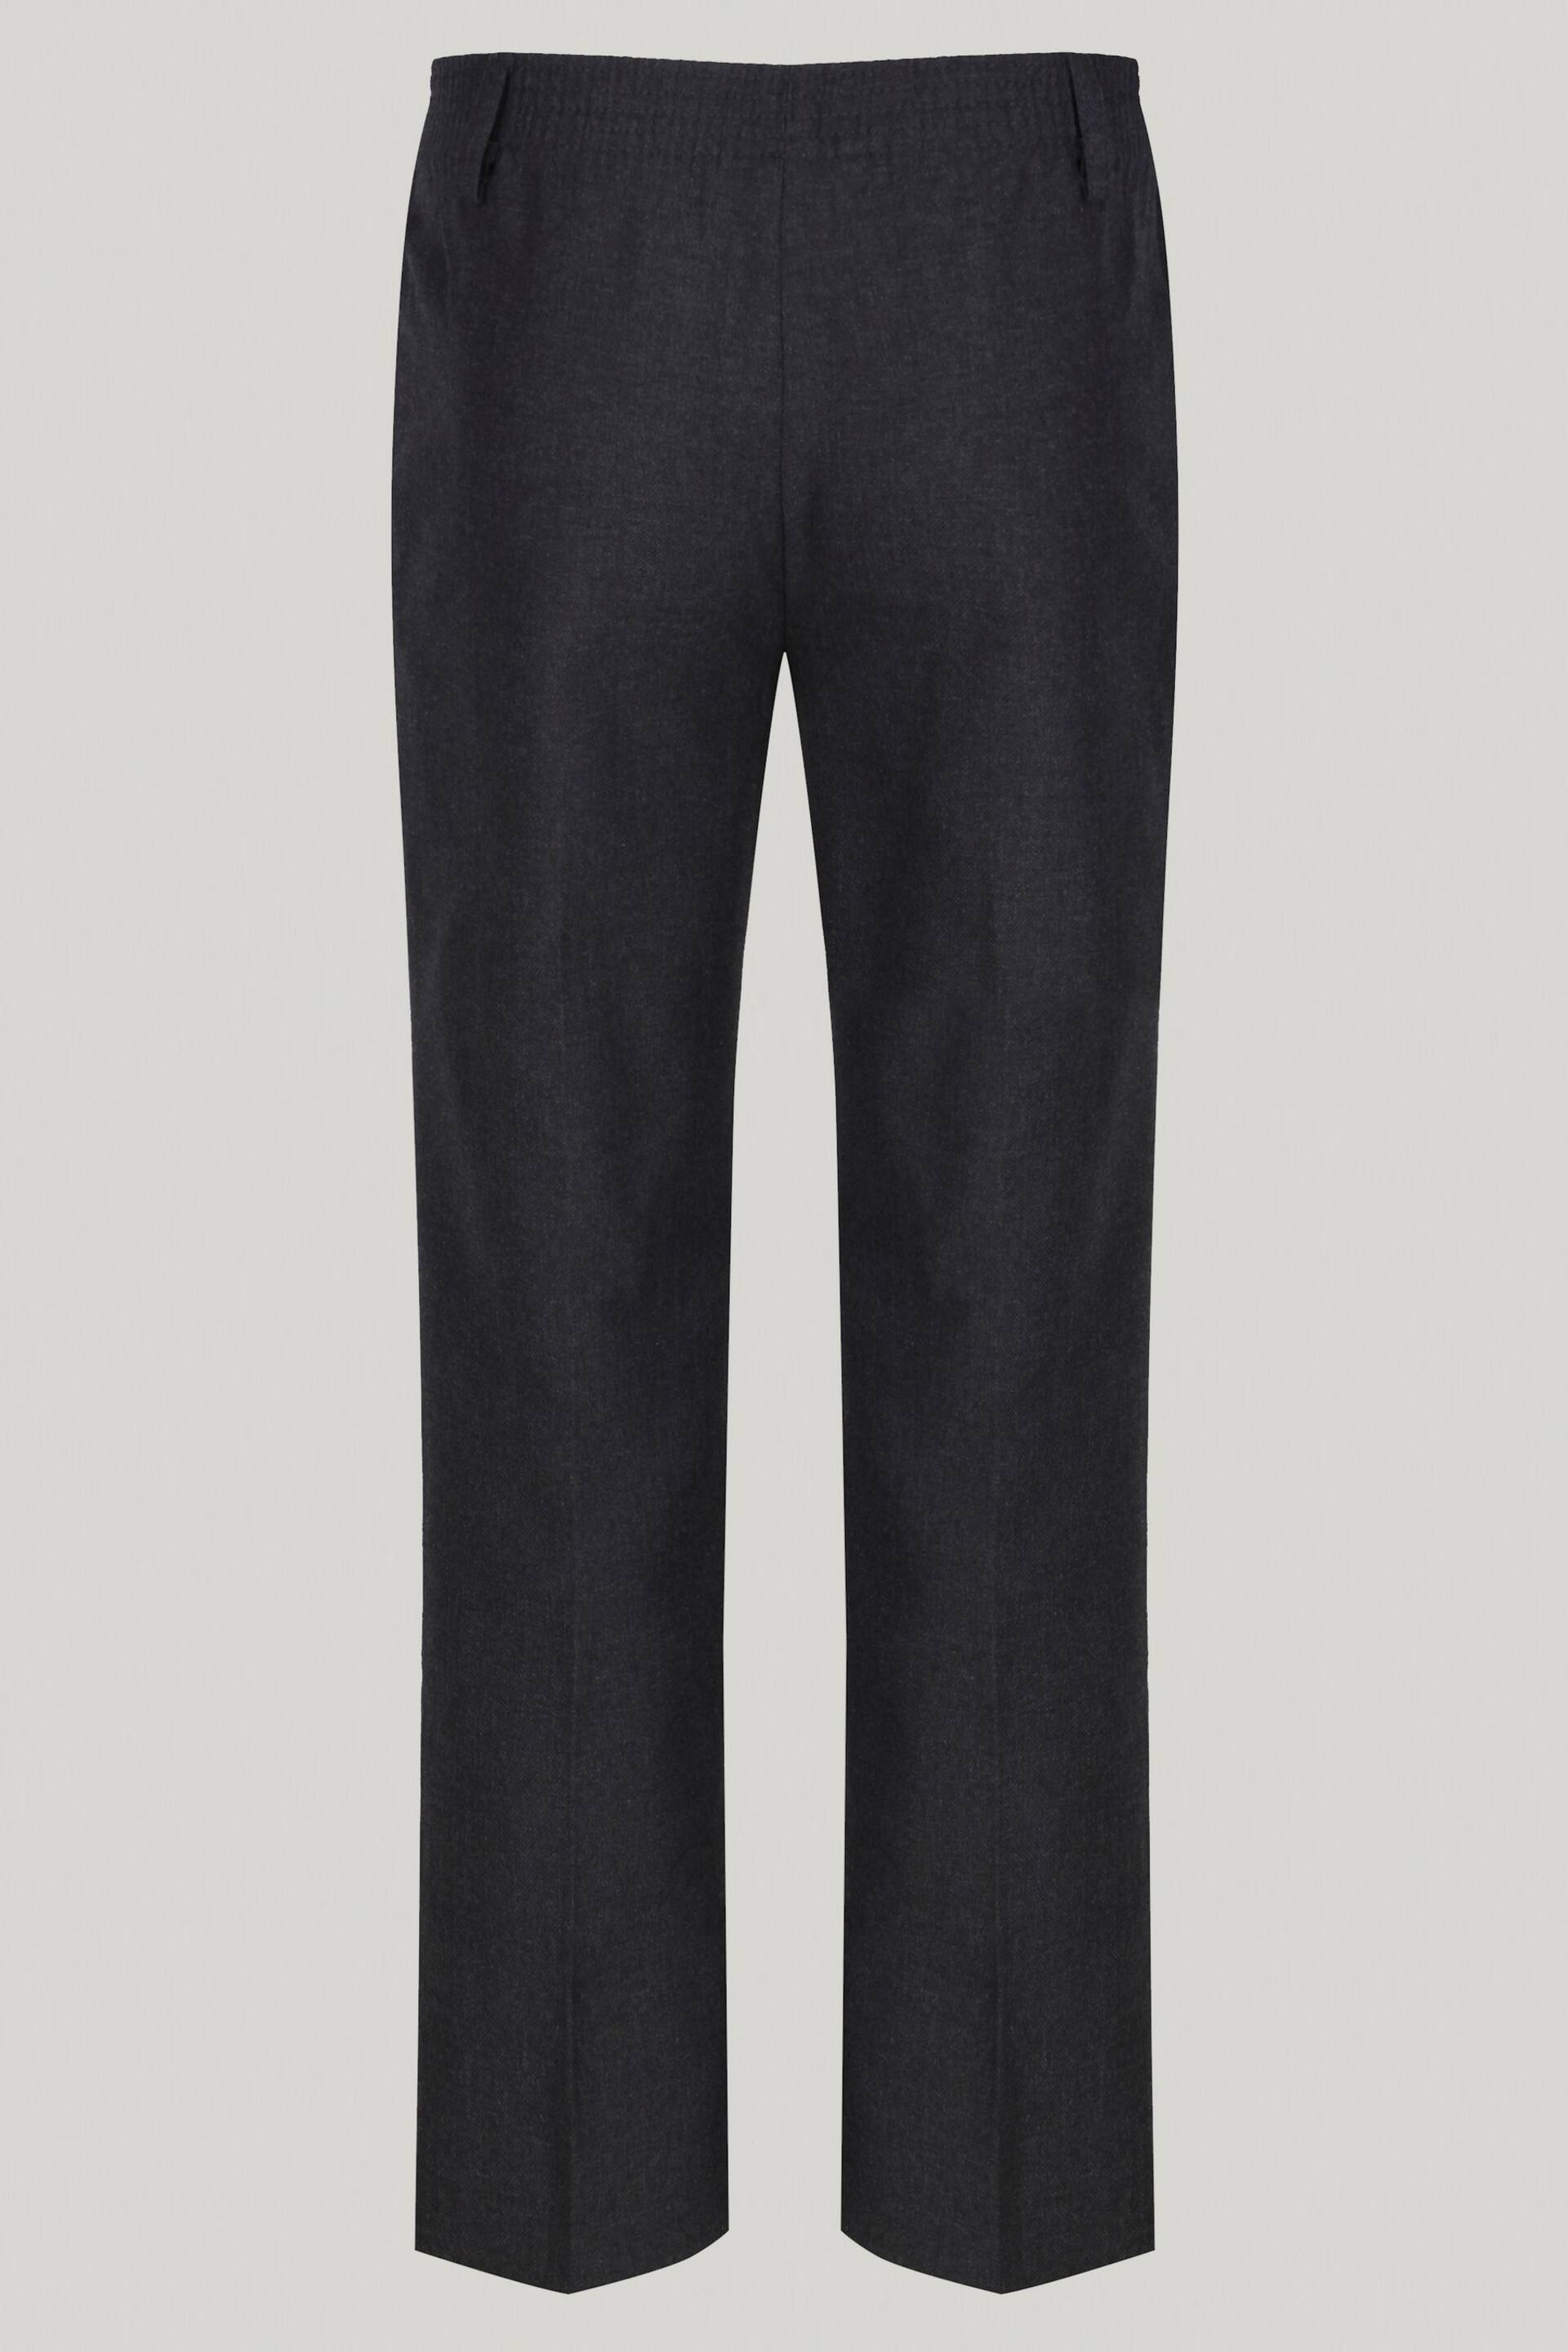 Trutex Junior Boys Regular Fit Grey School Trousers - Image 5 of 5